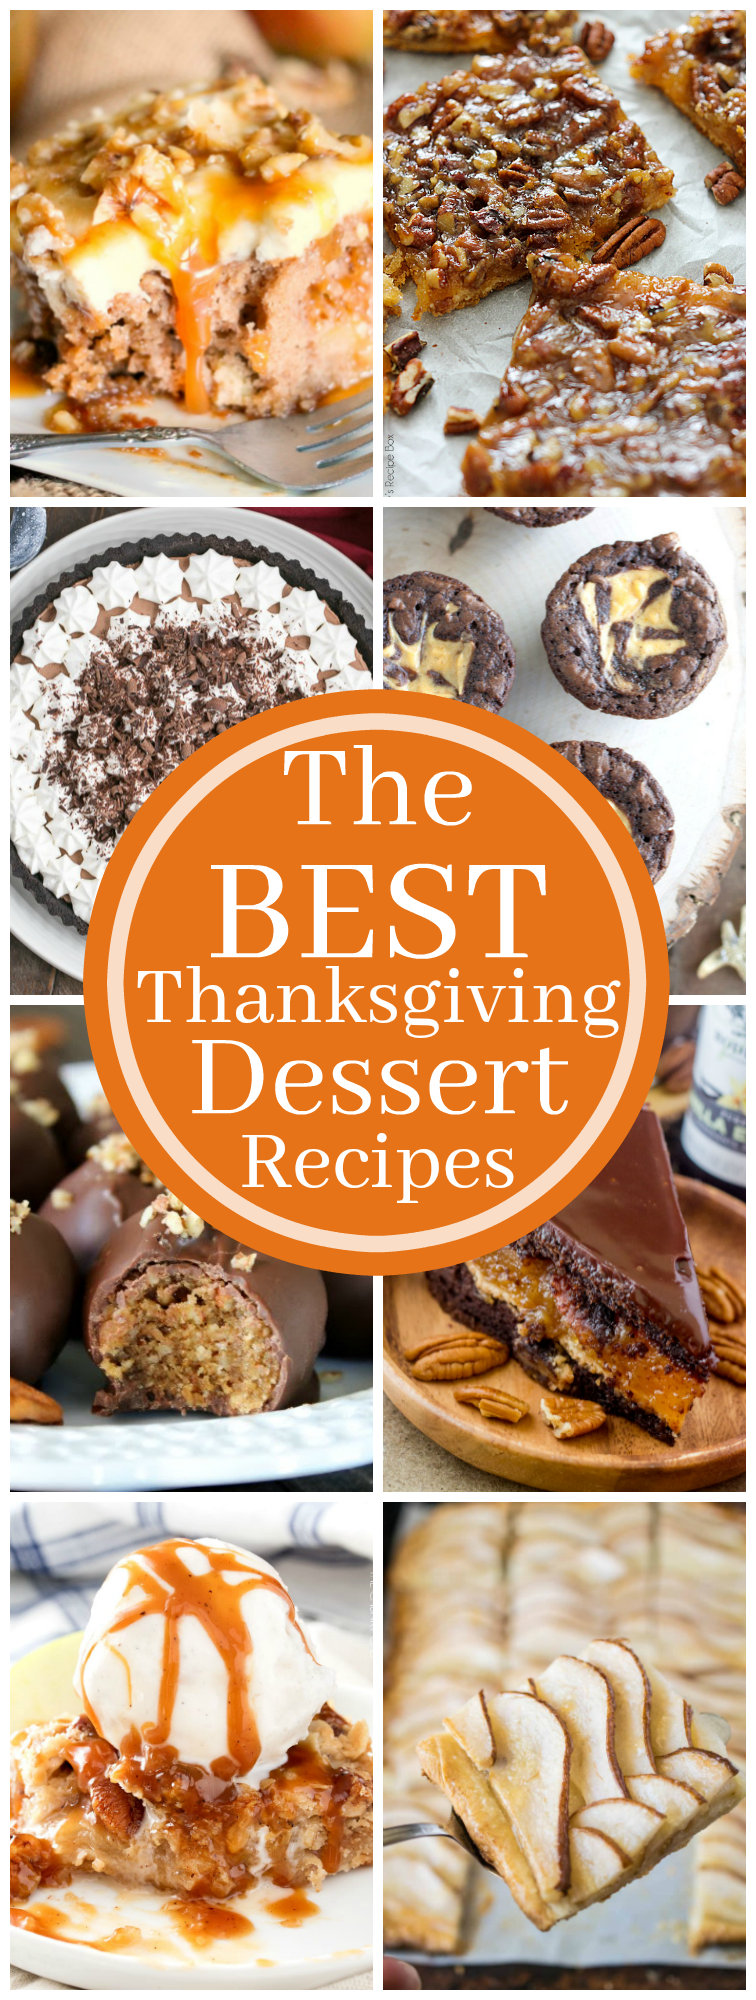 The Best Thanksgiving Dessert Recipes